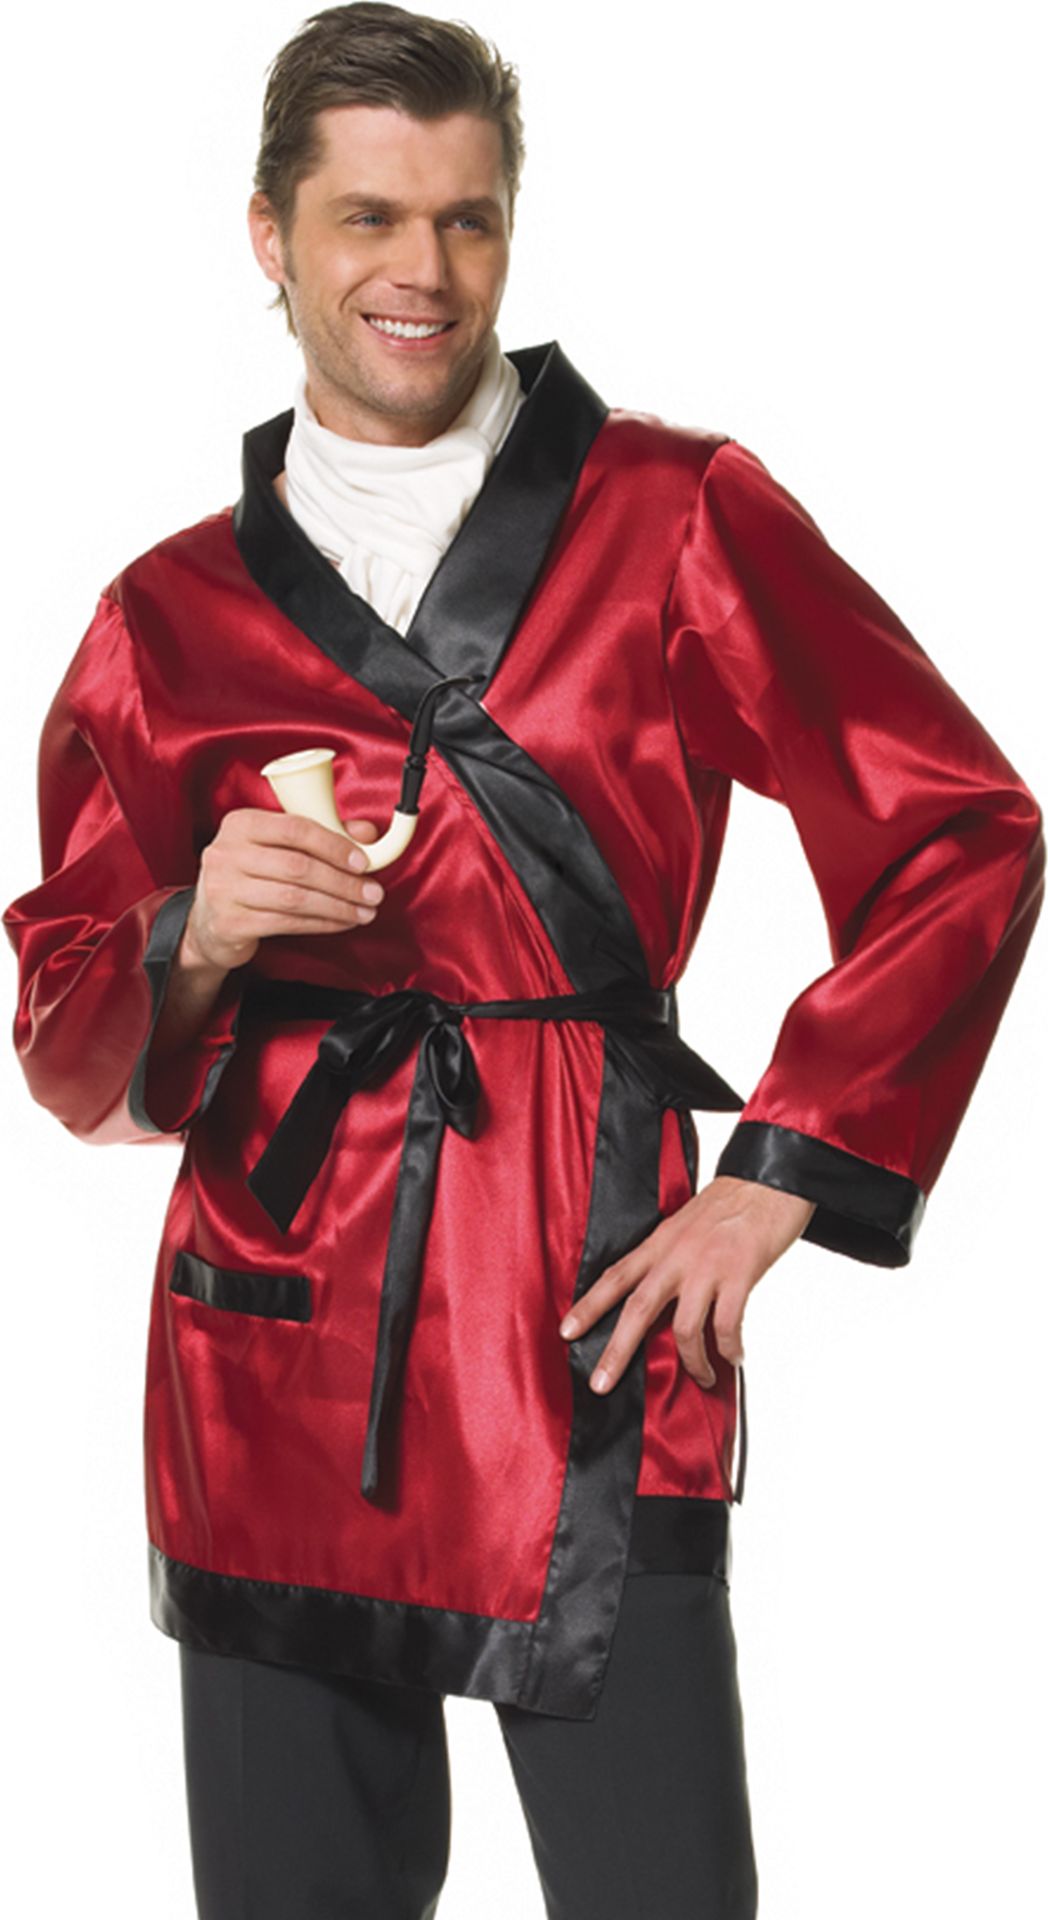 Rode bachelor kostuum